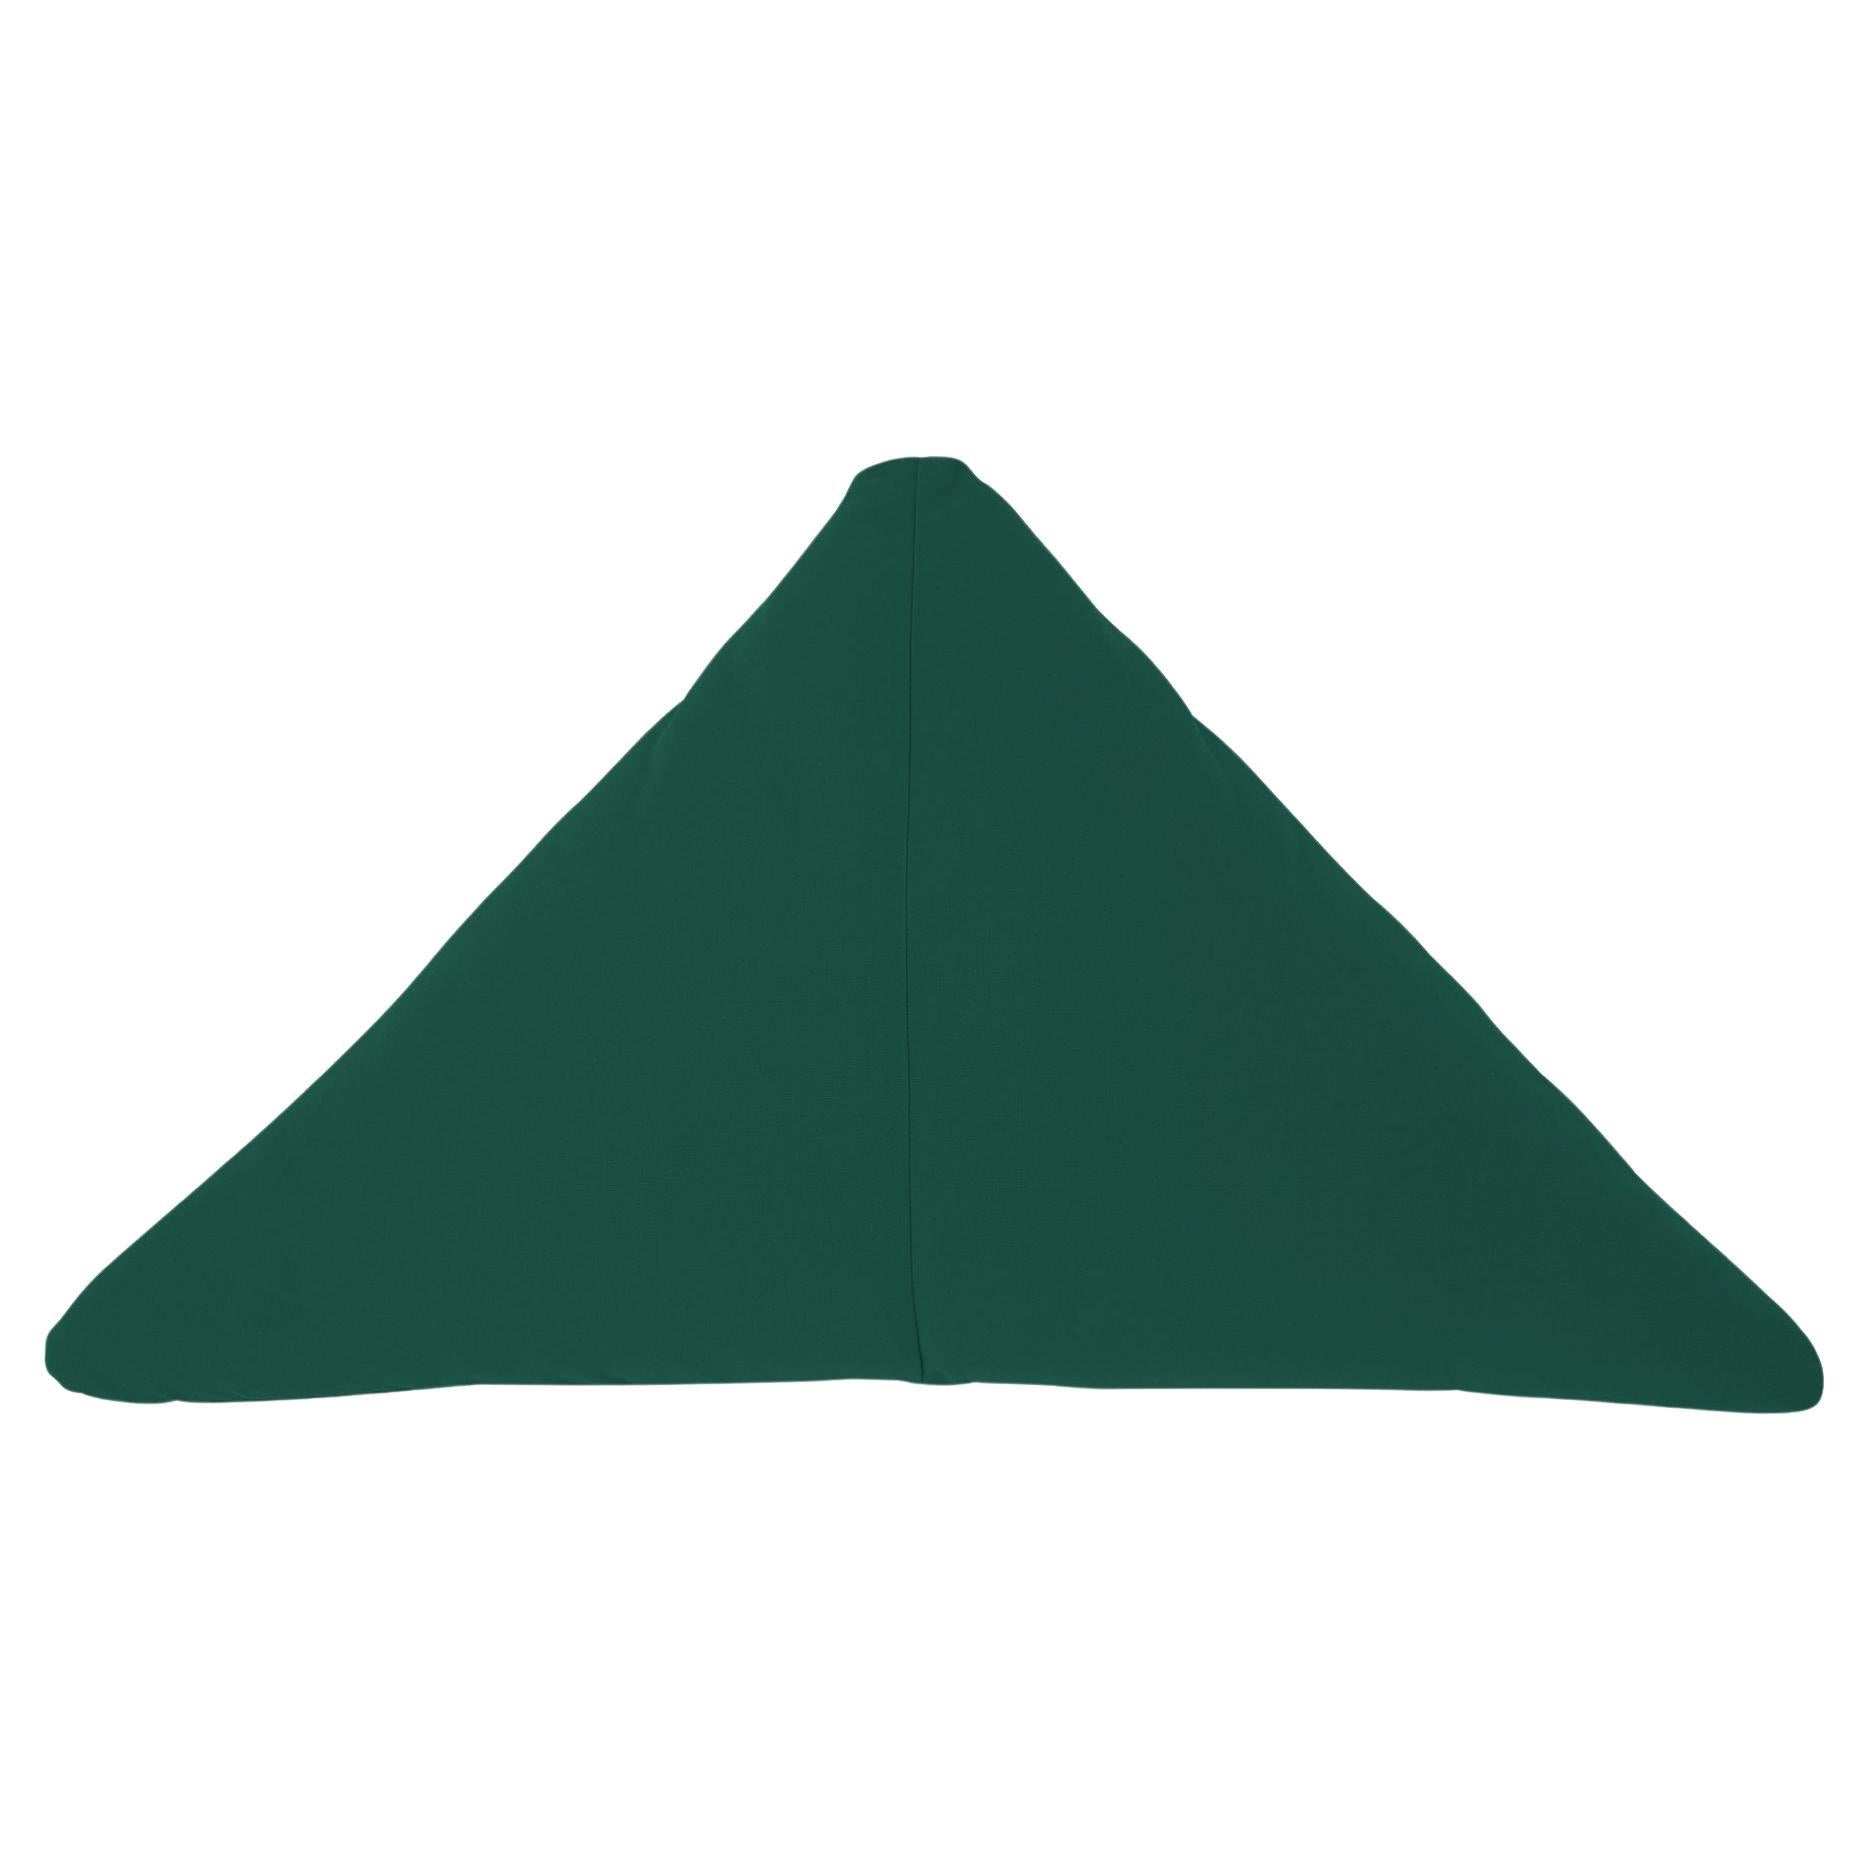 Bend Goods - Triangle Throw Pillow in Forest Green Sunbrella